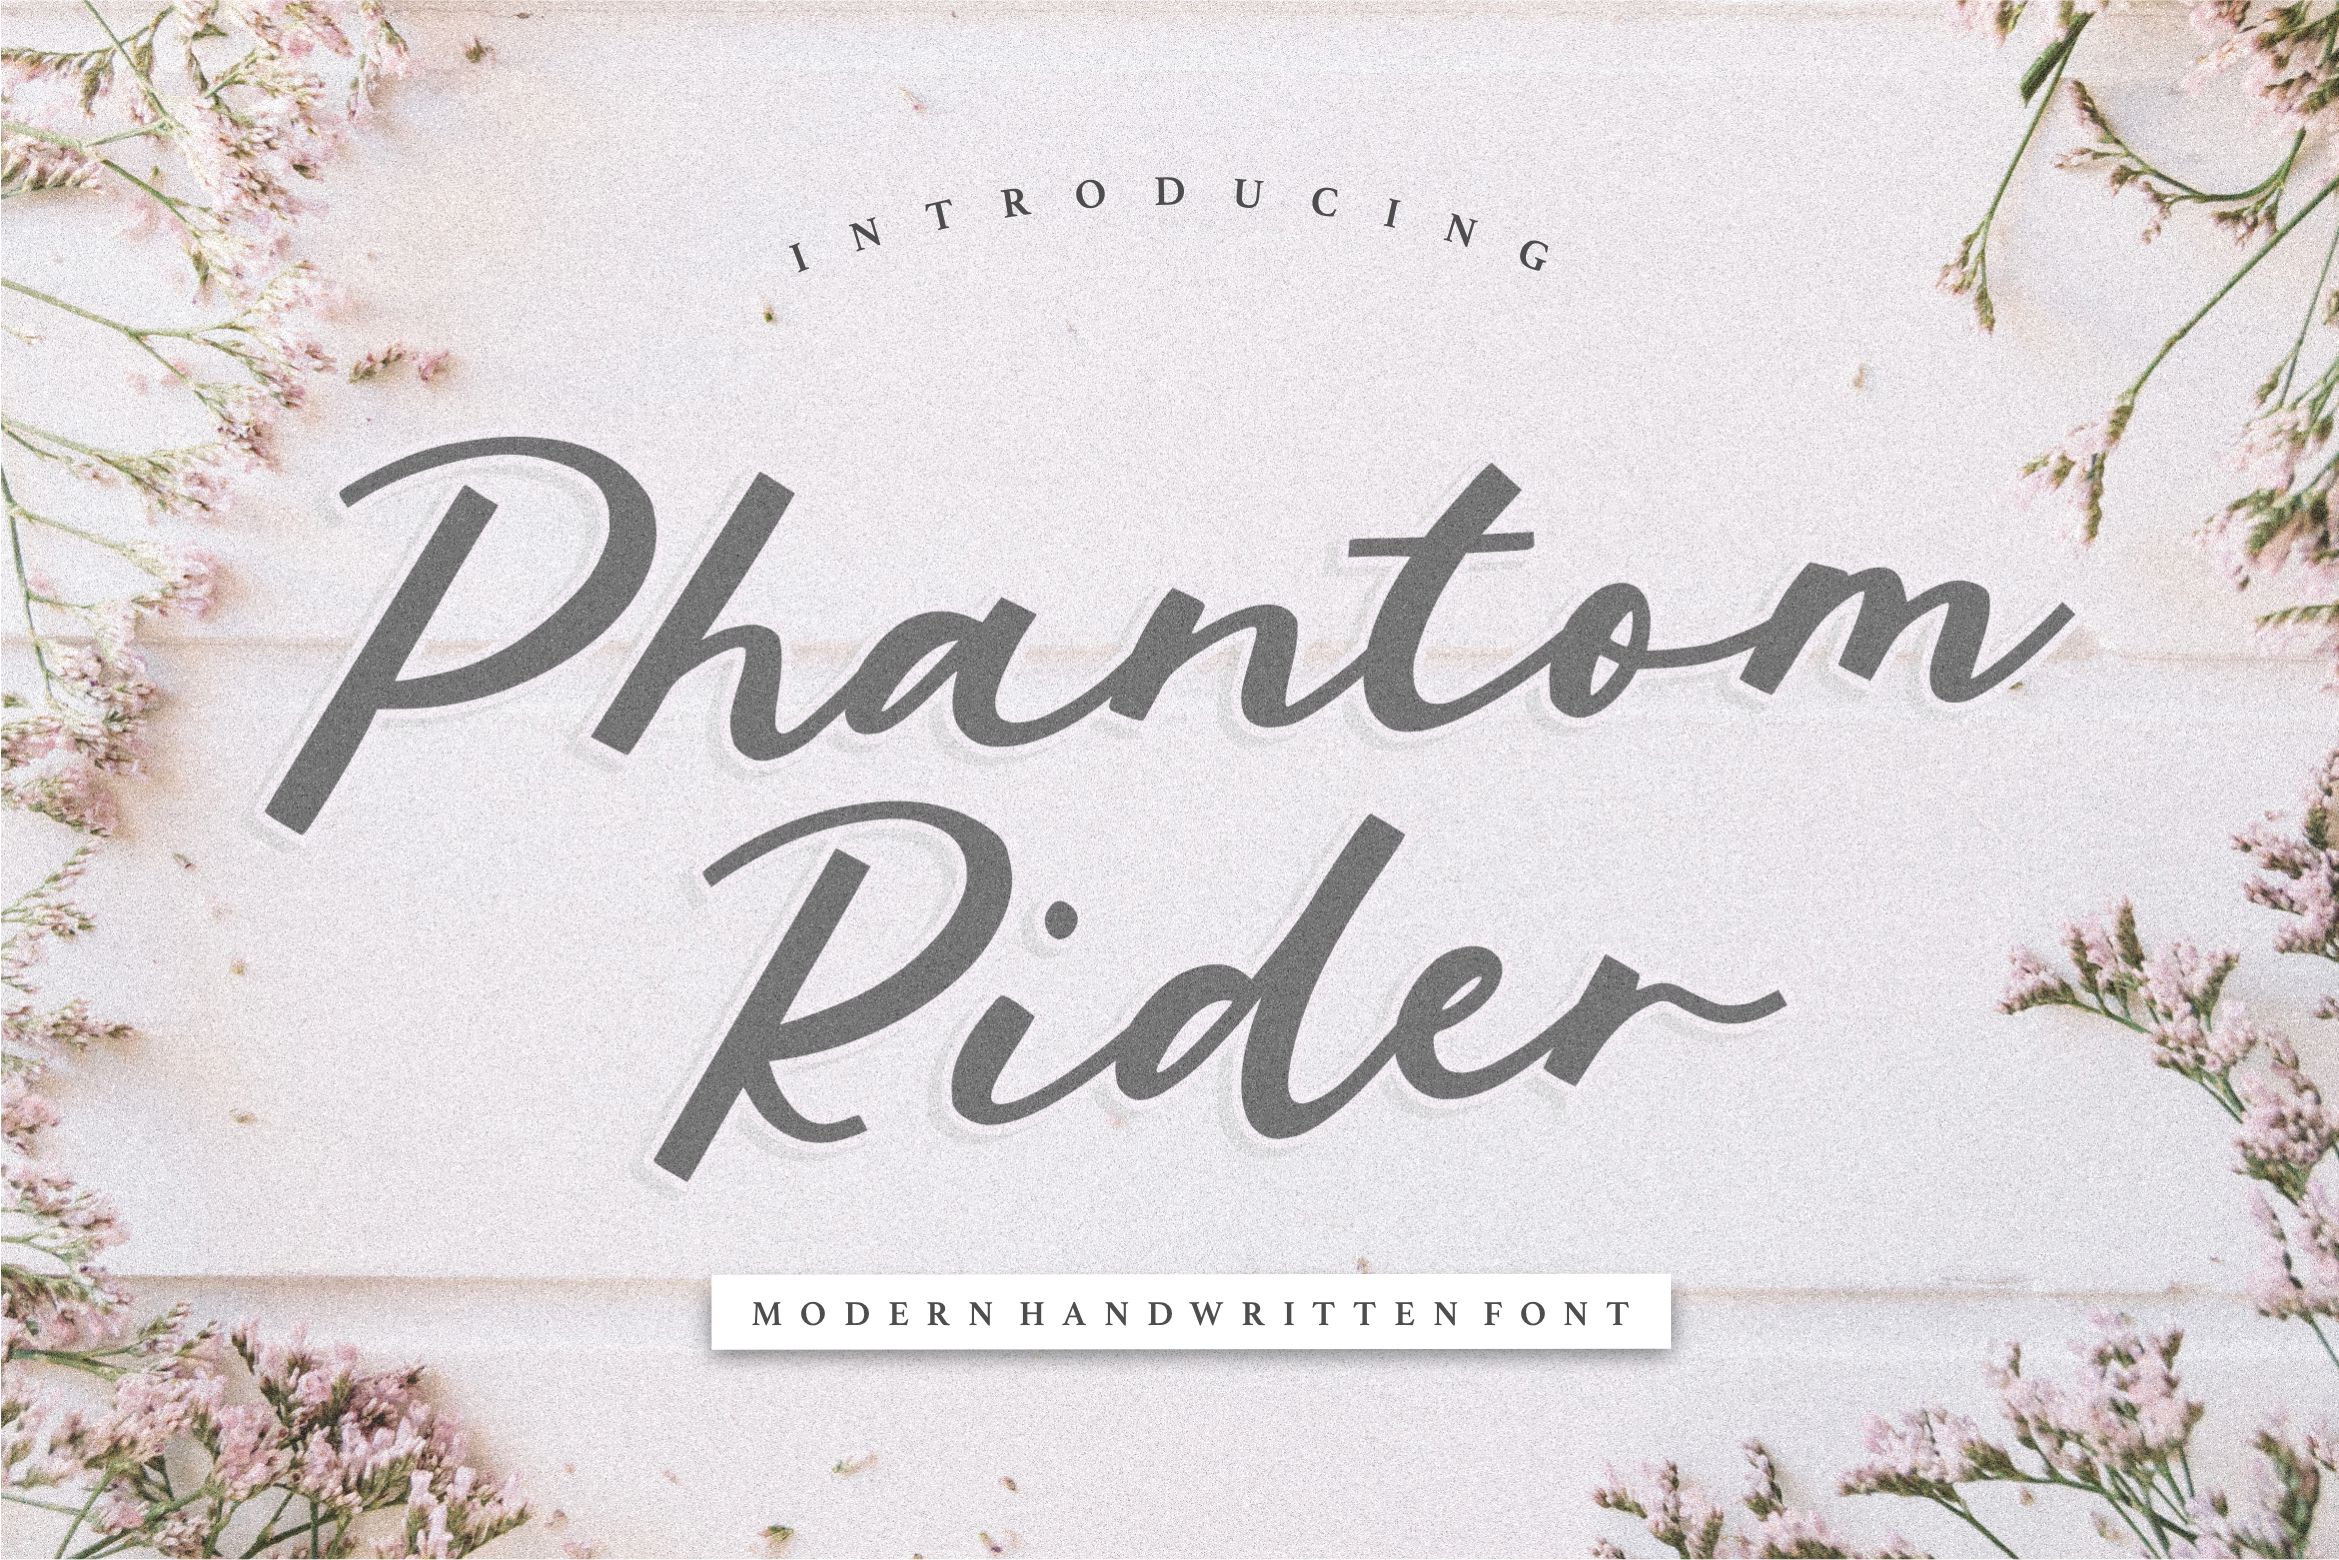 Phantom Rider